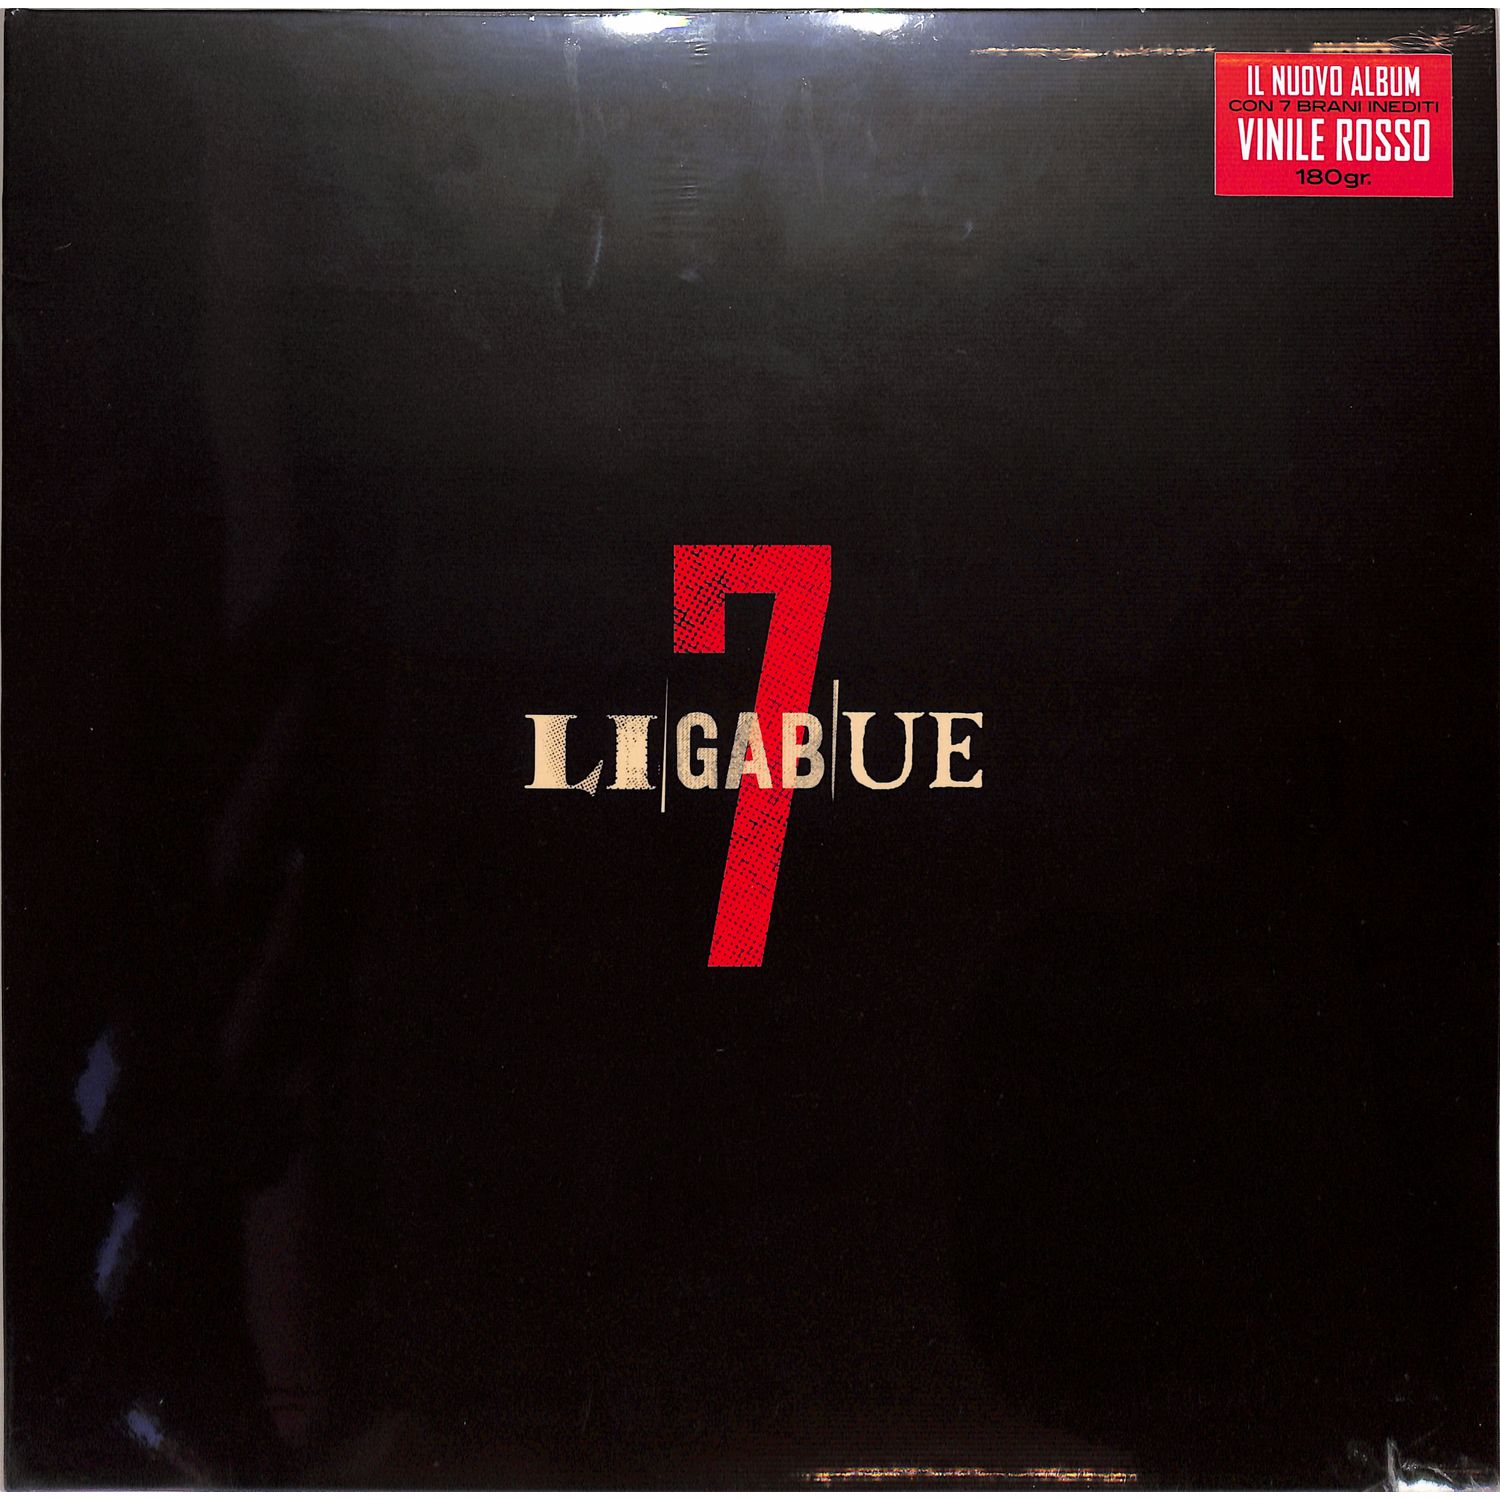 Luciano Ligabue - 7 